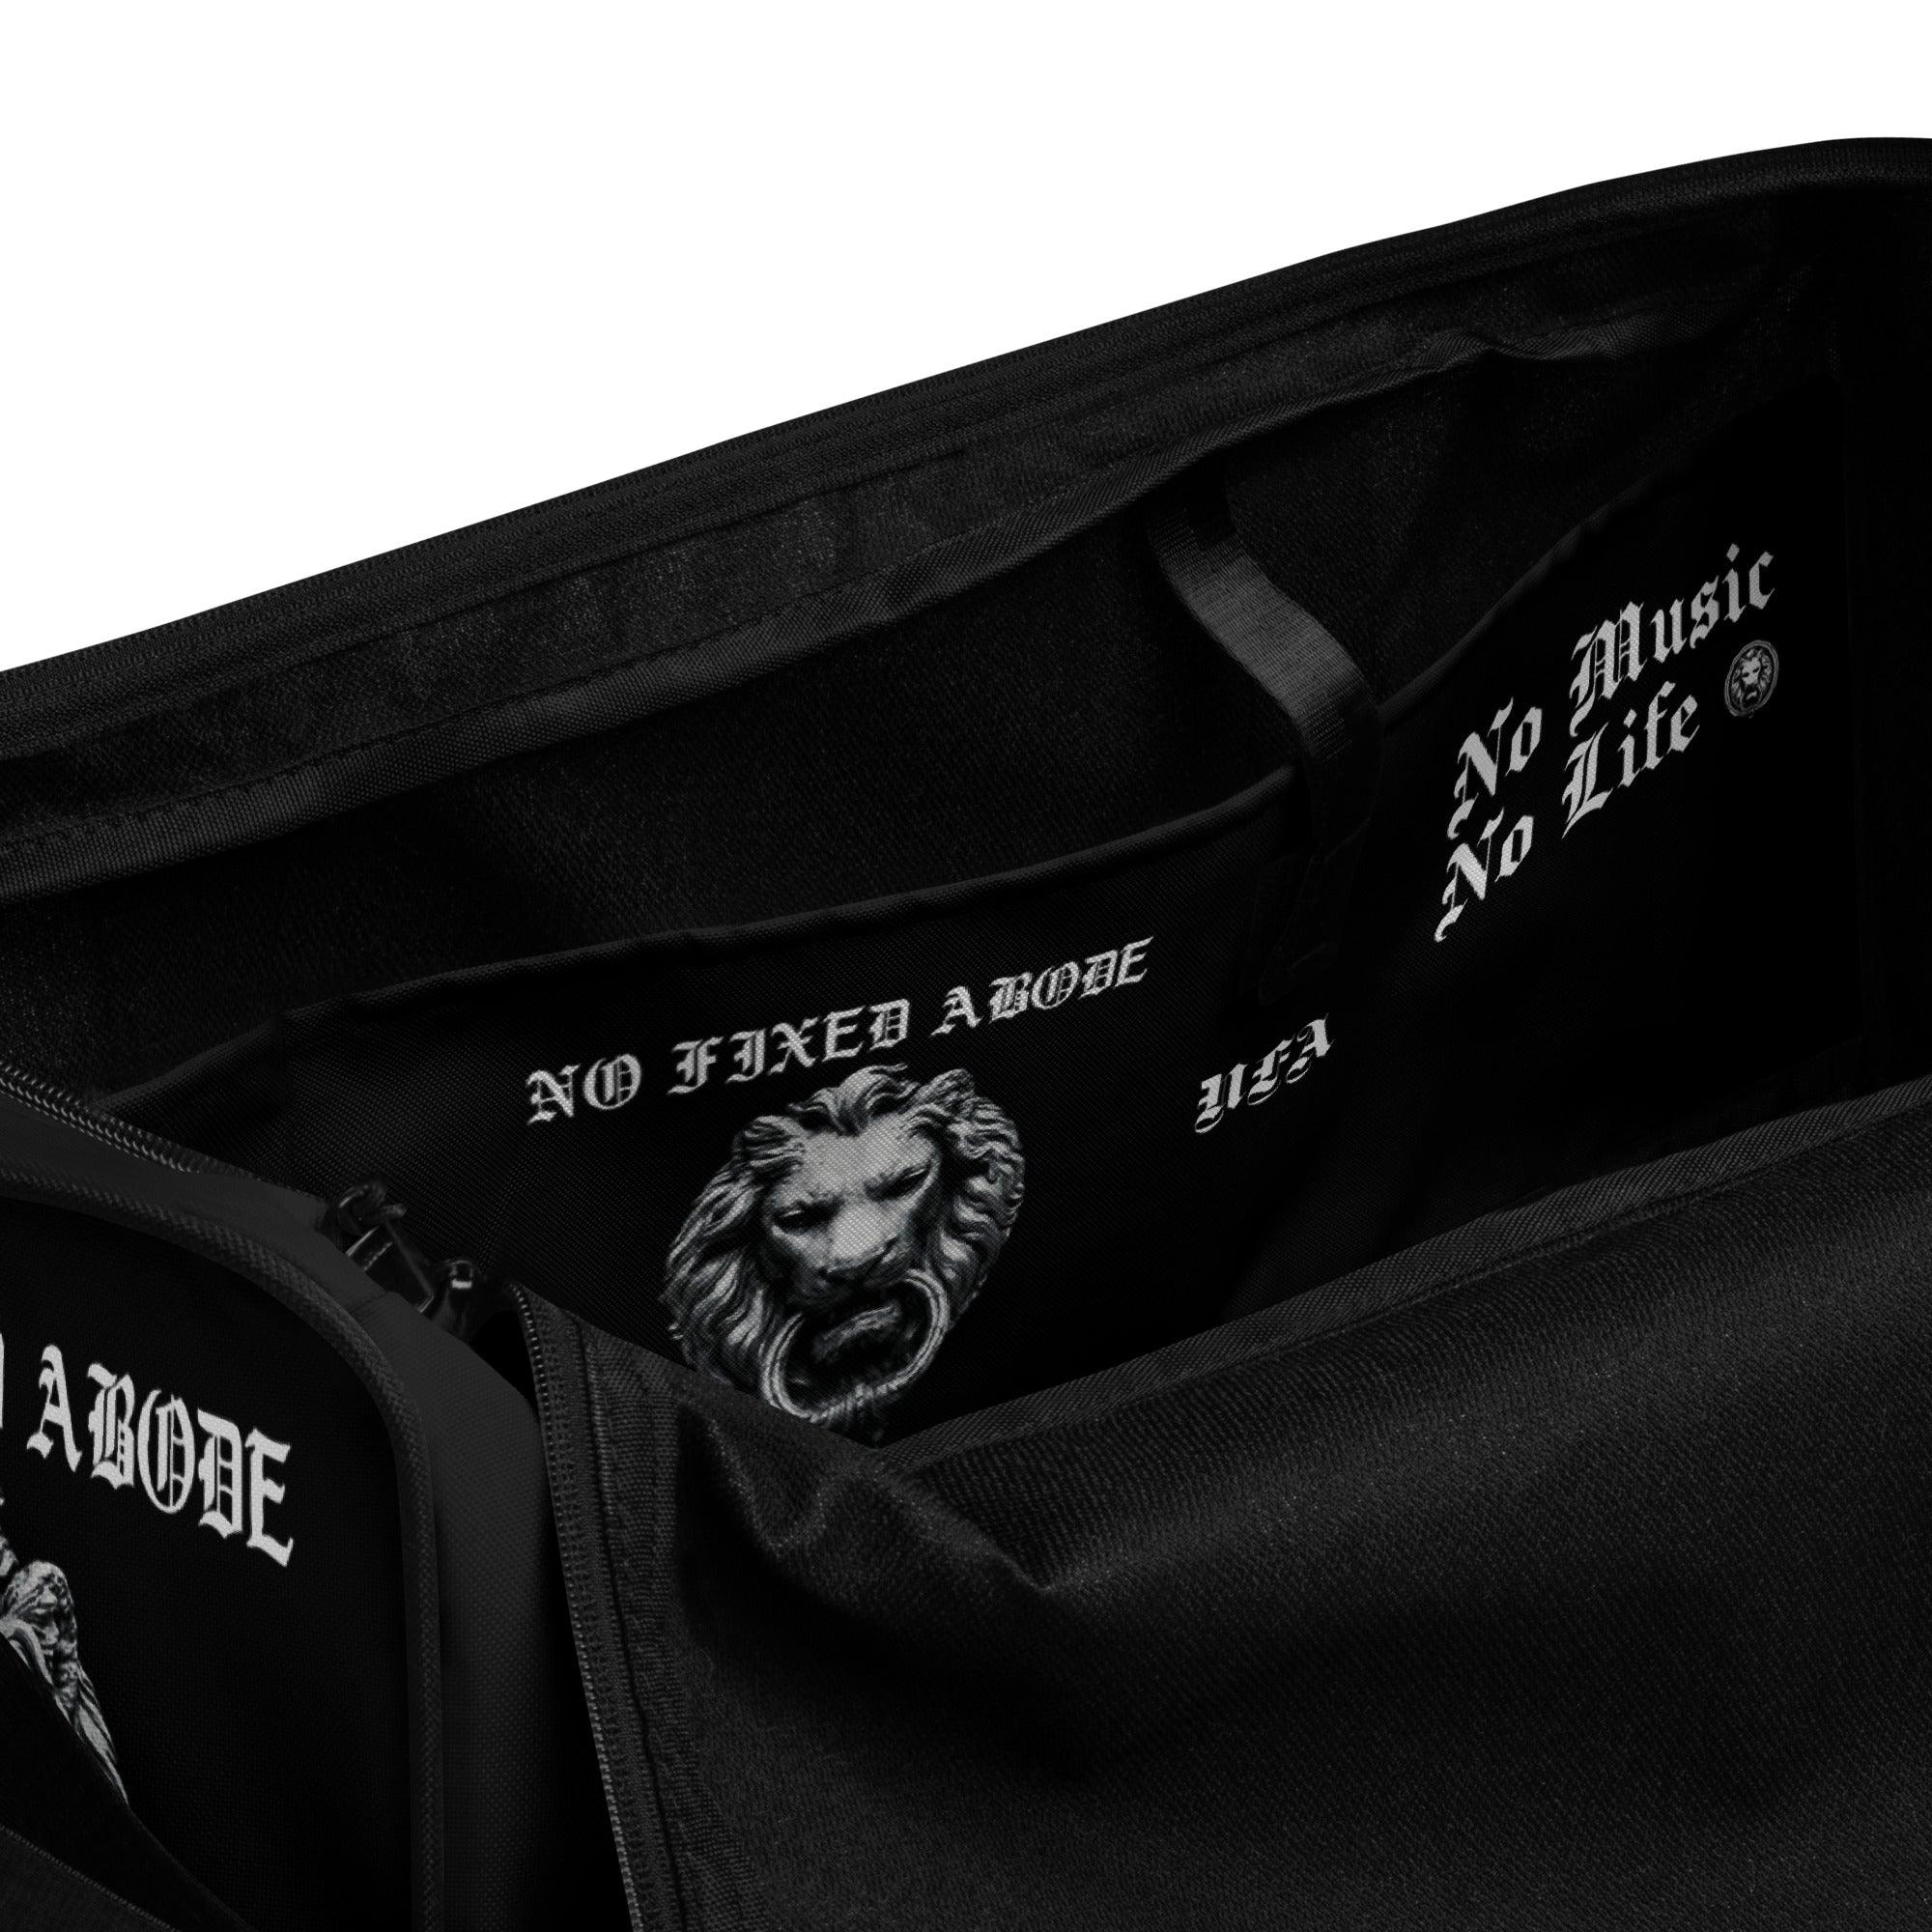 No Music No Life Duffle bag - NO FIXED ABODE Punkrock Mens Luxury Streetwear UK